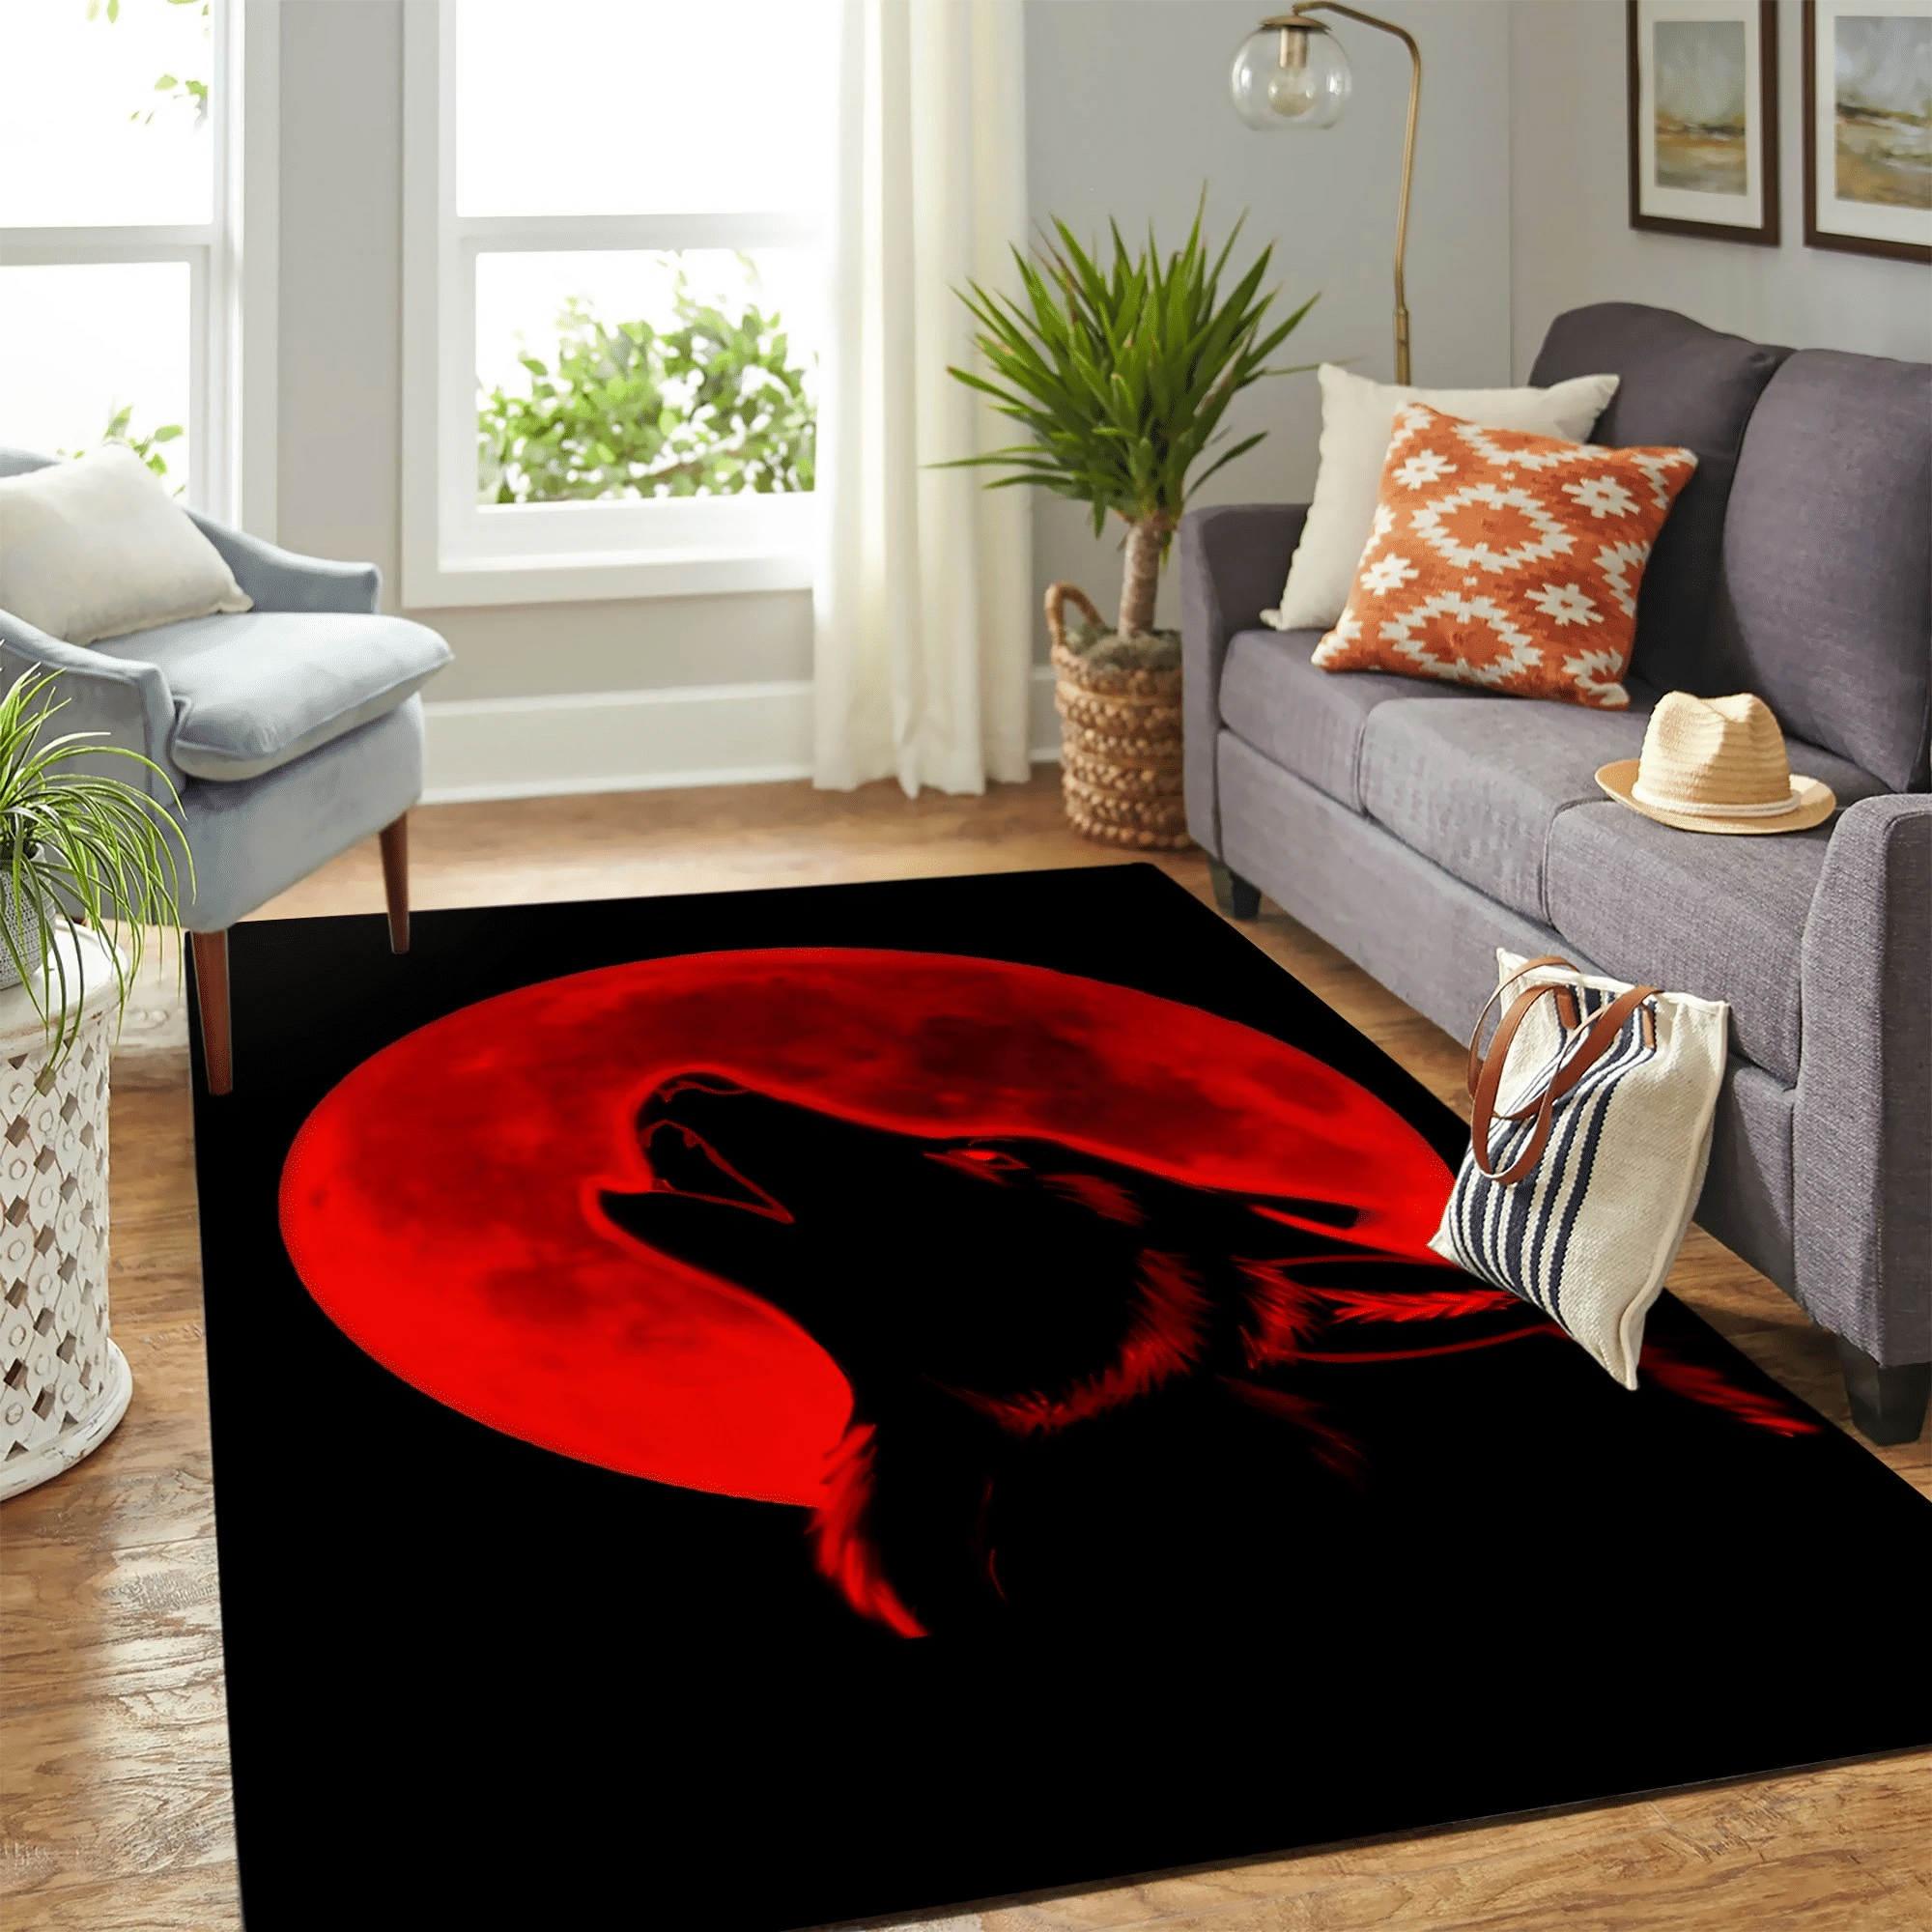 Red Moon Wolf Carpet Rug Chrismas Gift - Indoor Outdoor Rugs 1